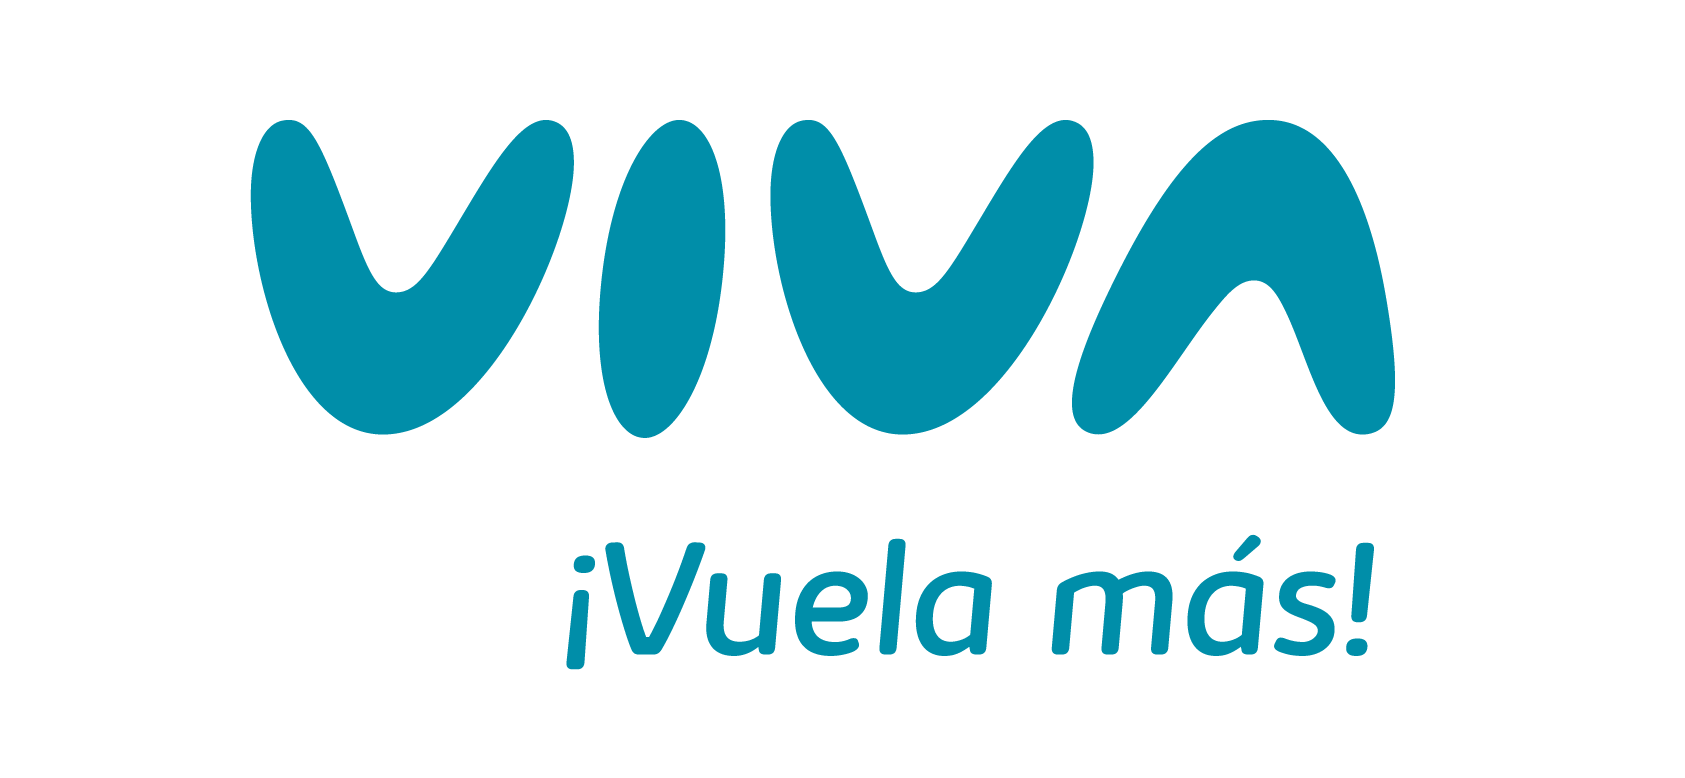 Grupo Viva